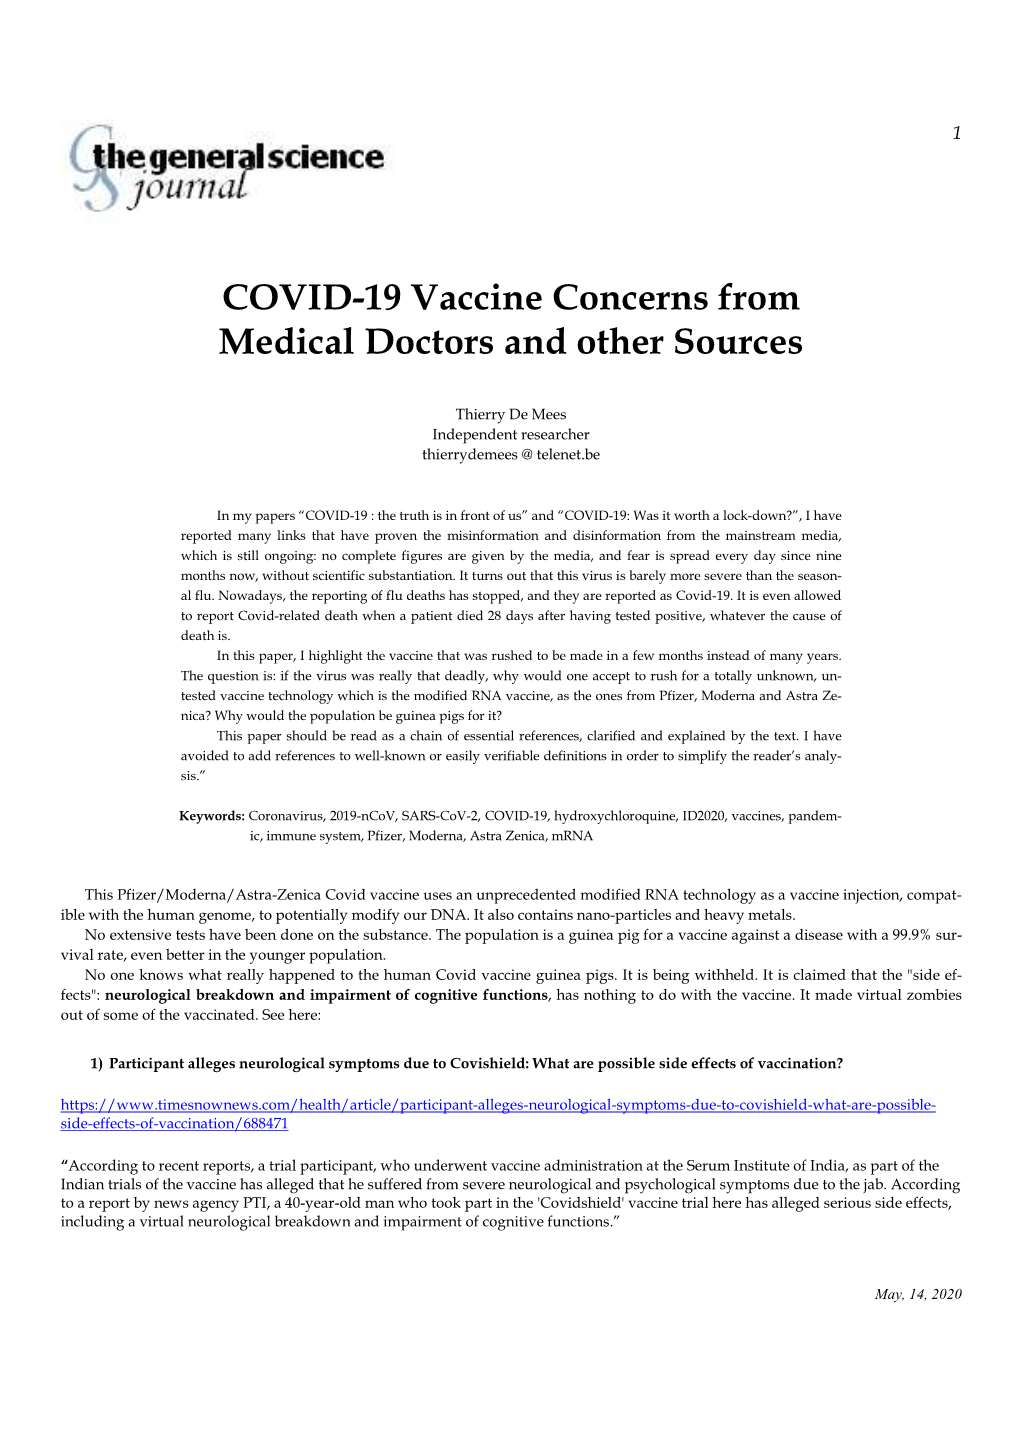 COVID-19-Vaccine Concerns